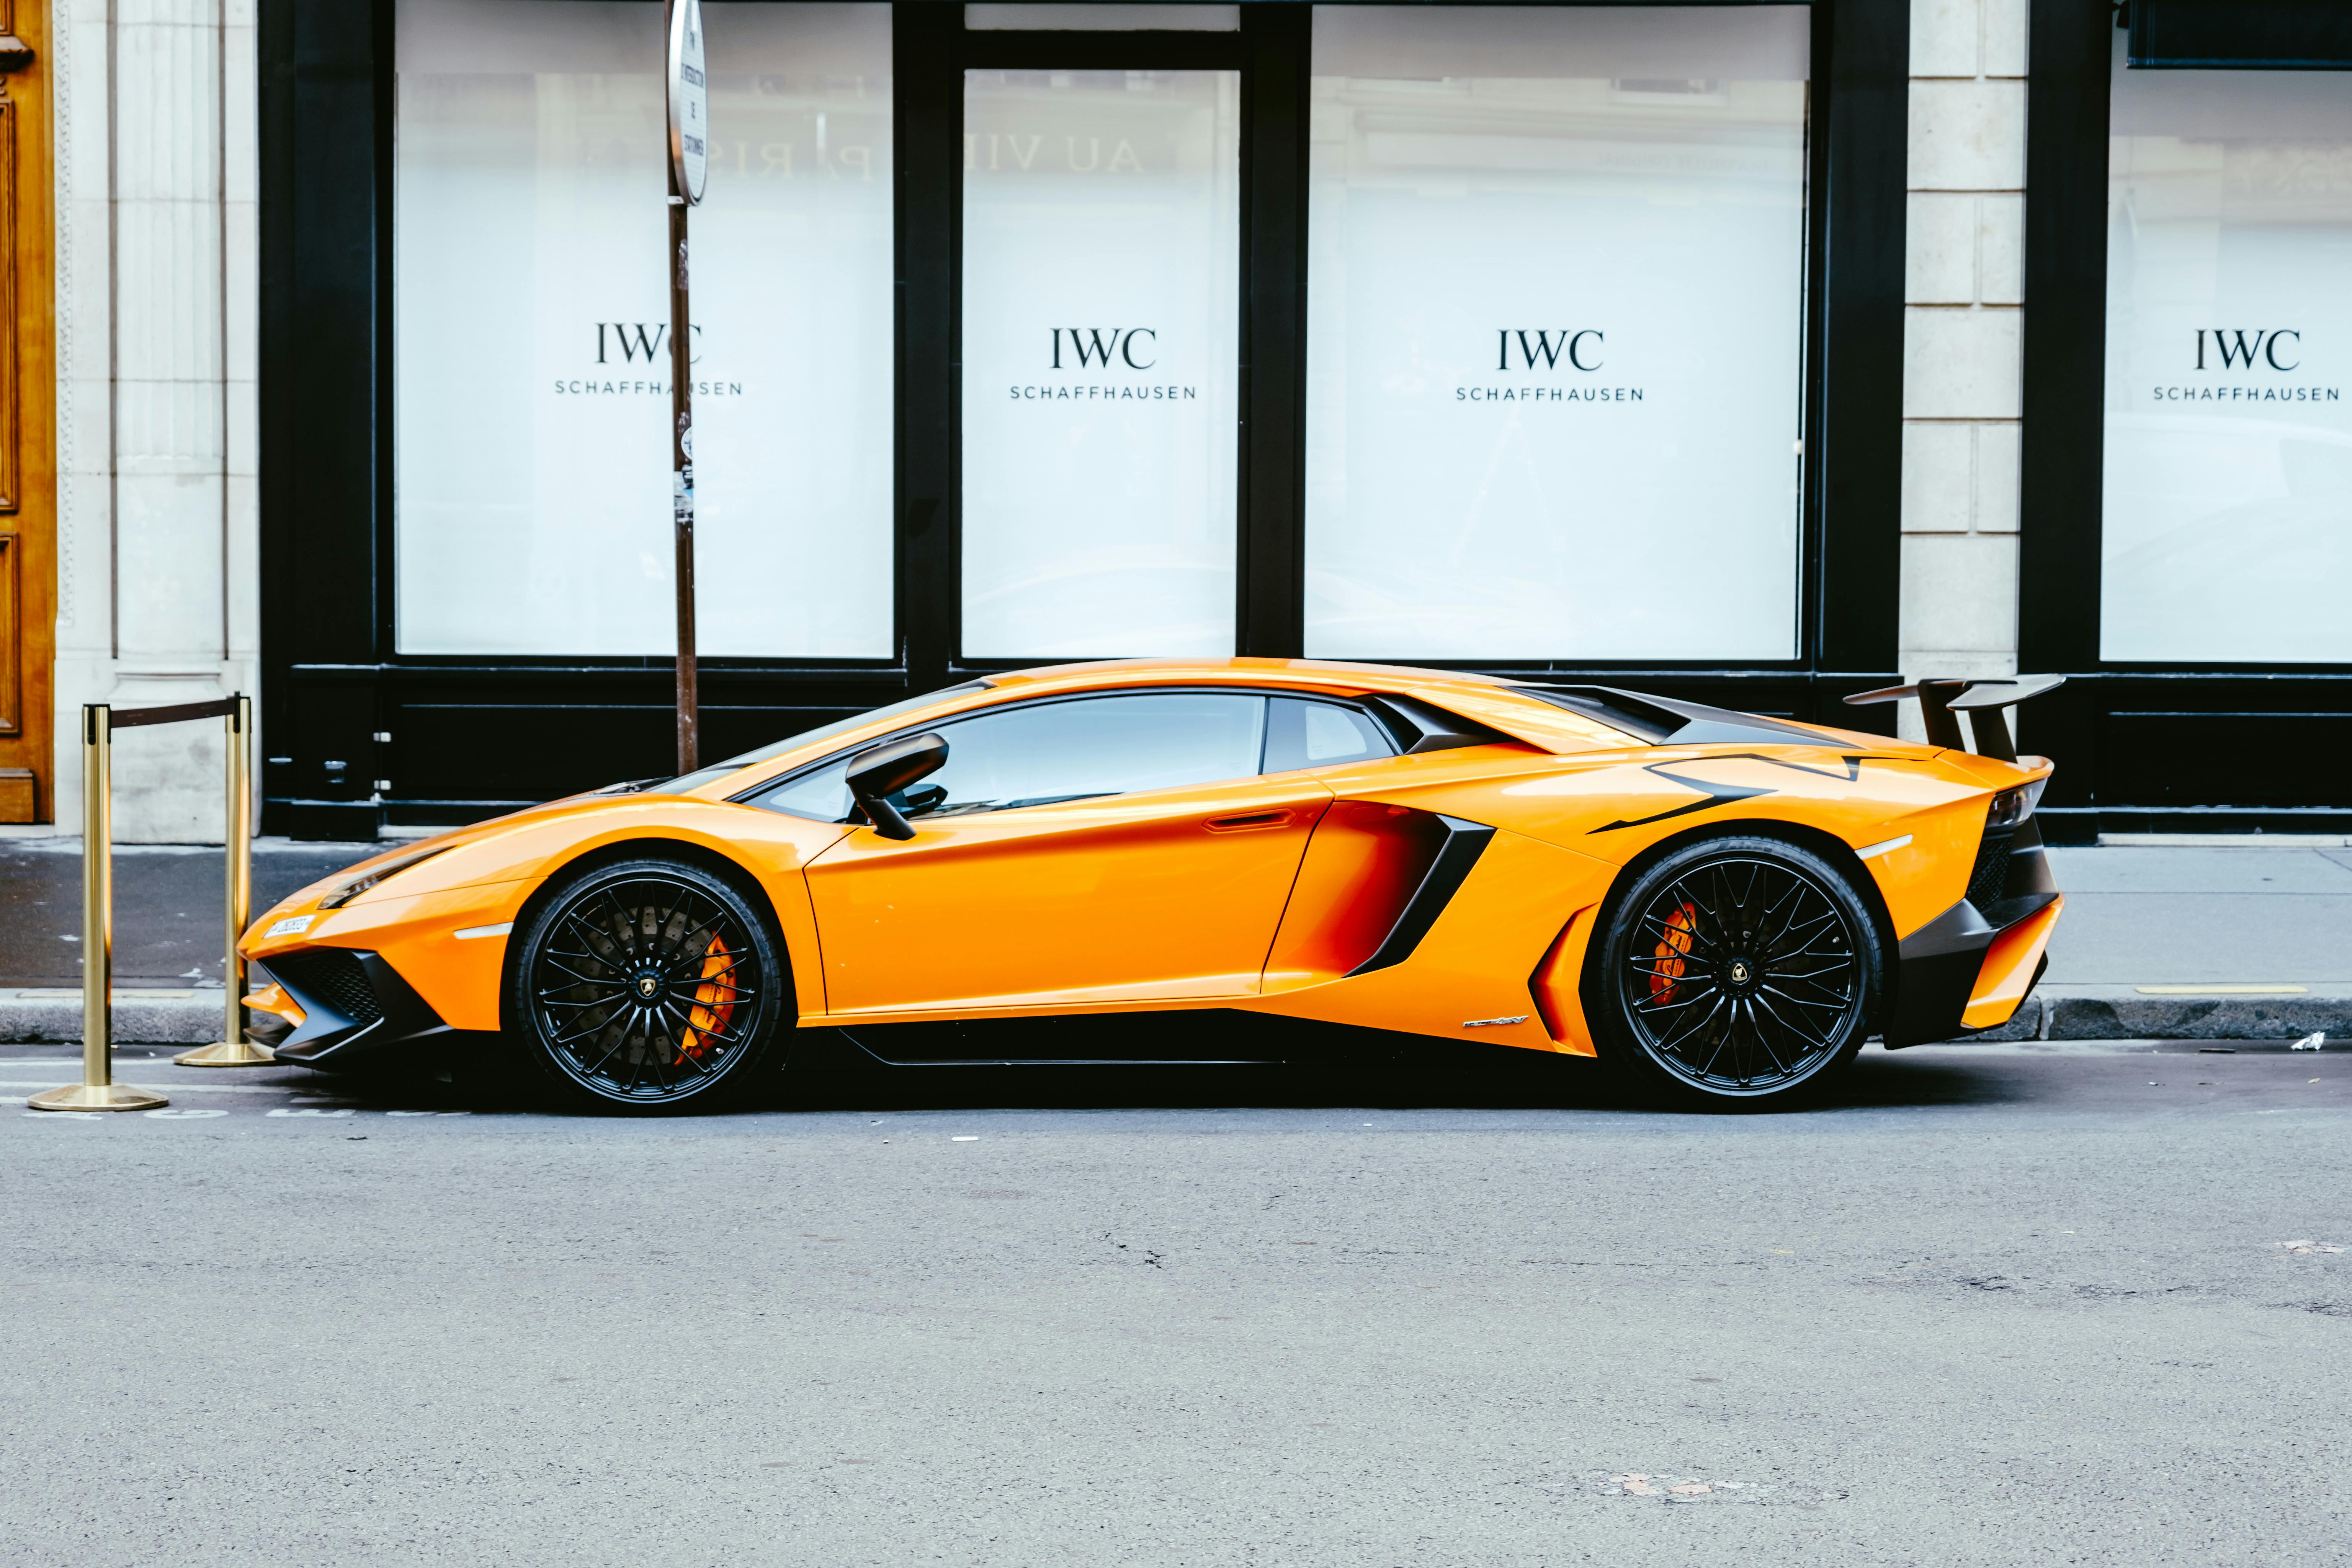 Black and Orange Lamborghini Aventador · Free Stock Photo